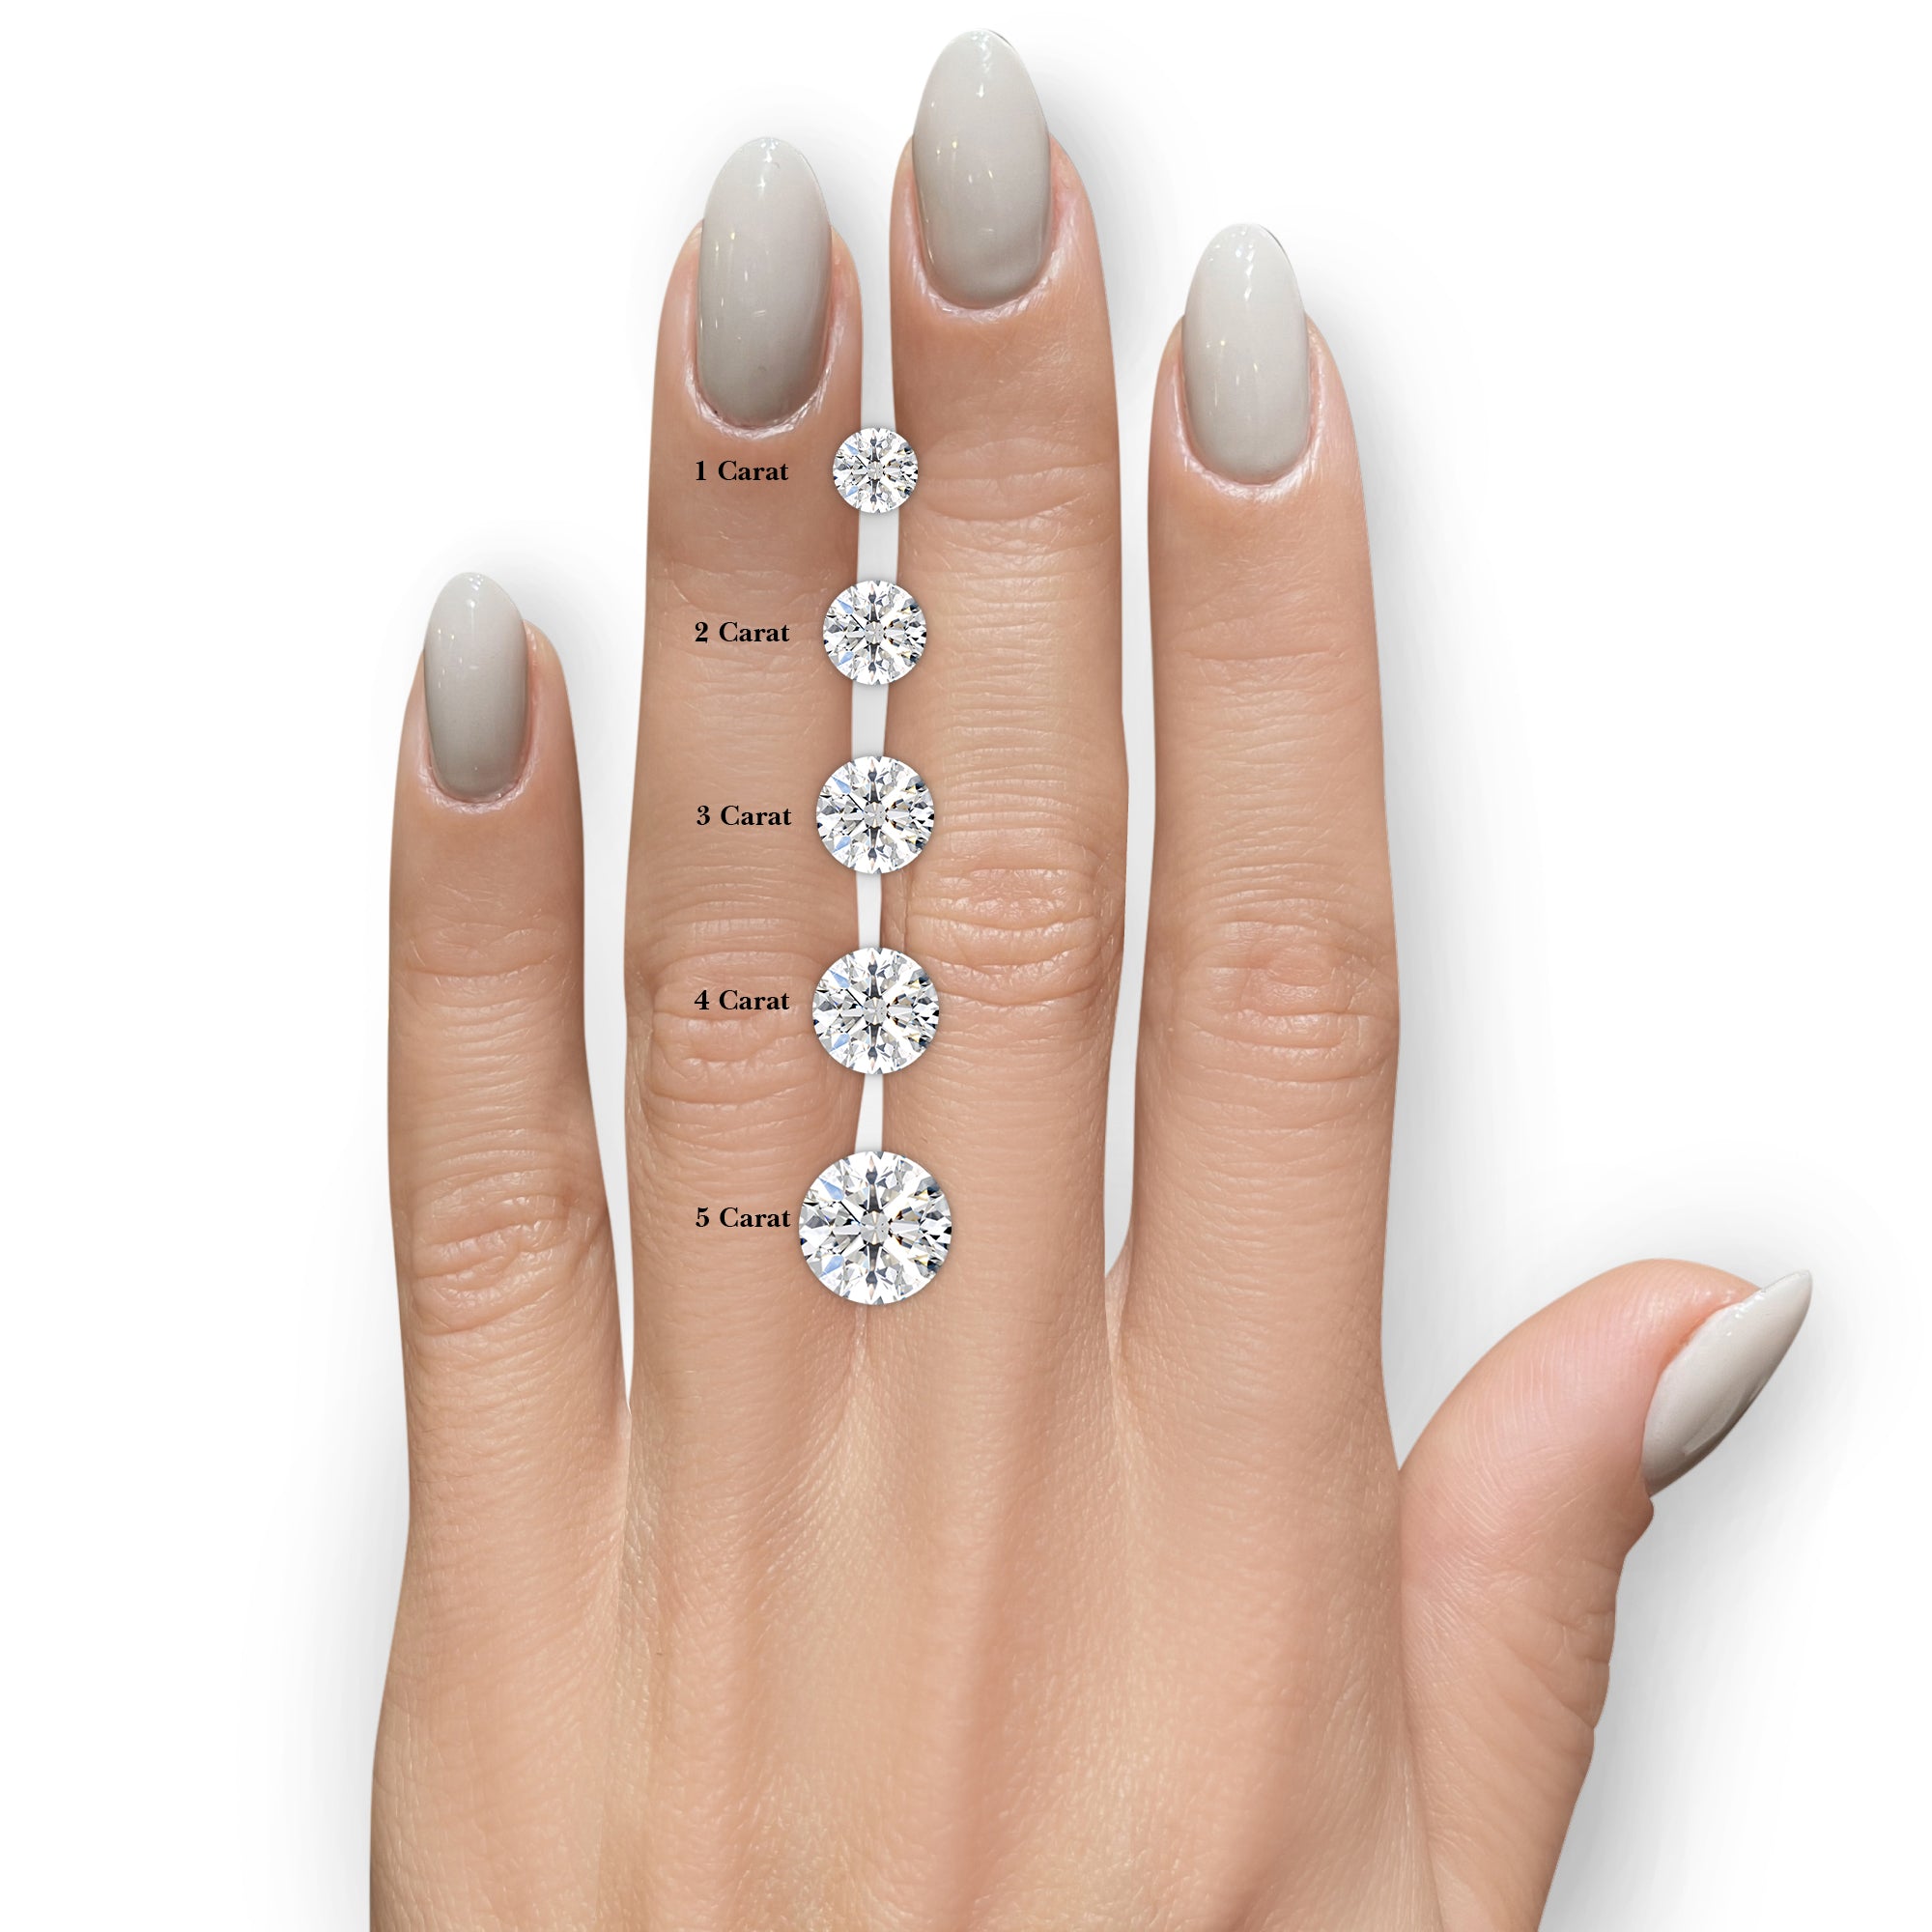 Sienna Diamond Engagement Ring -18K Yellow Gold